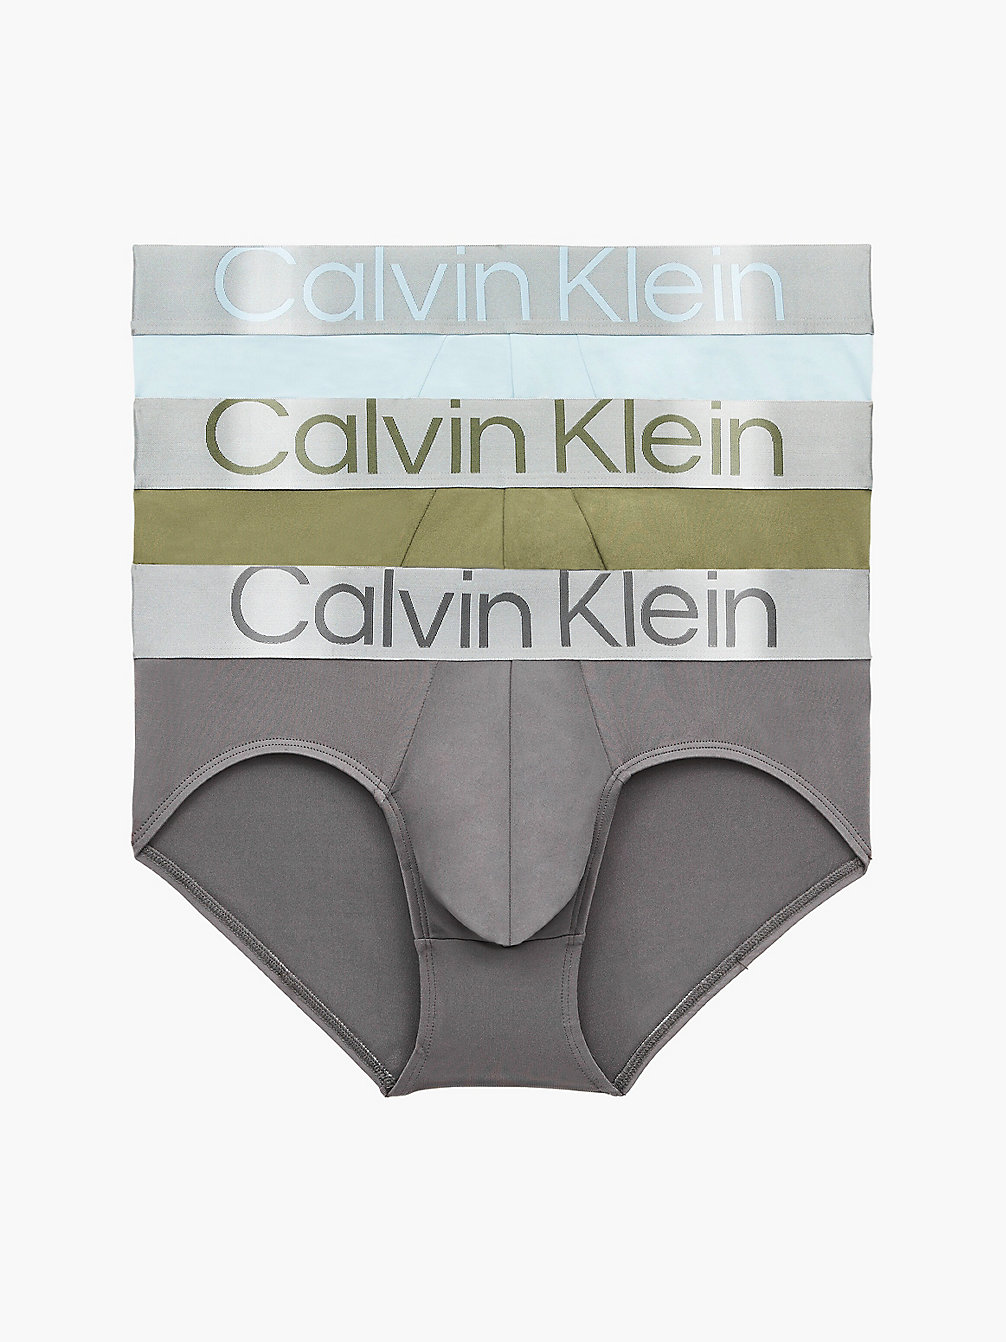 NAPA/ PALEST BLUE/ GREY SKY 3er-Pack Slips - Steel Micro undefined Herren Calvin Klein